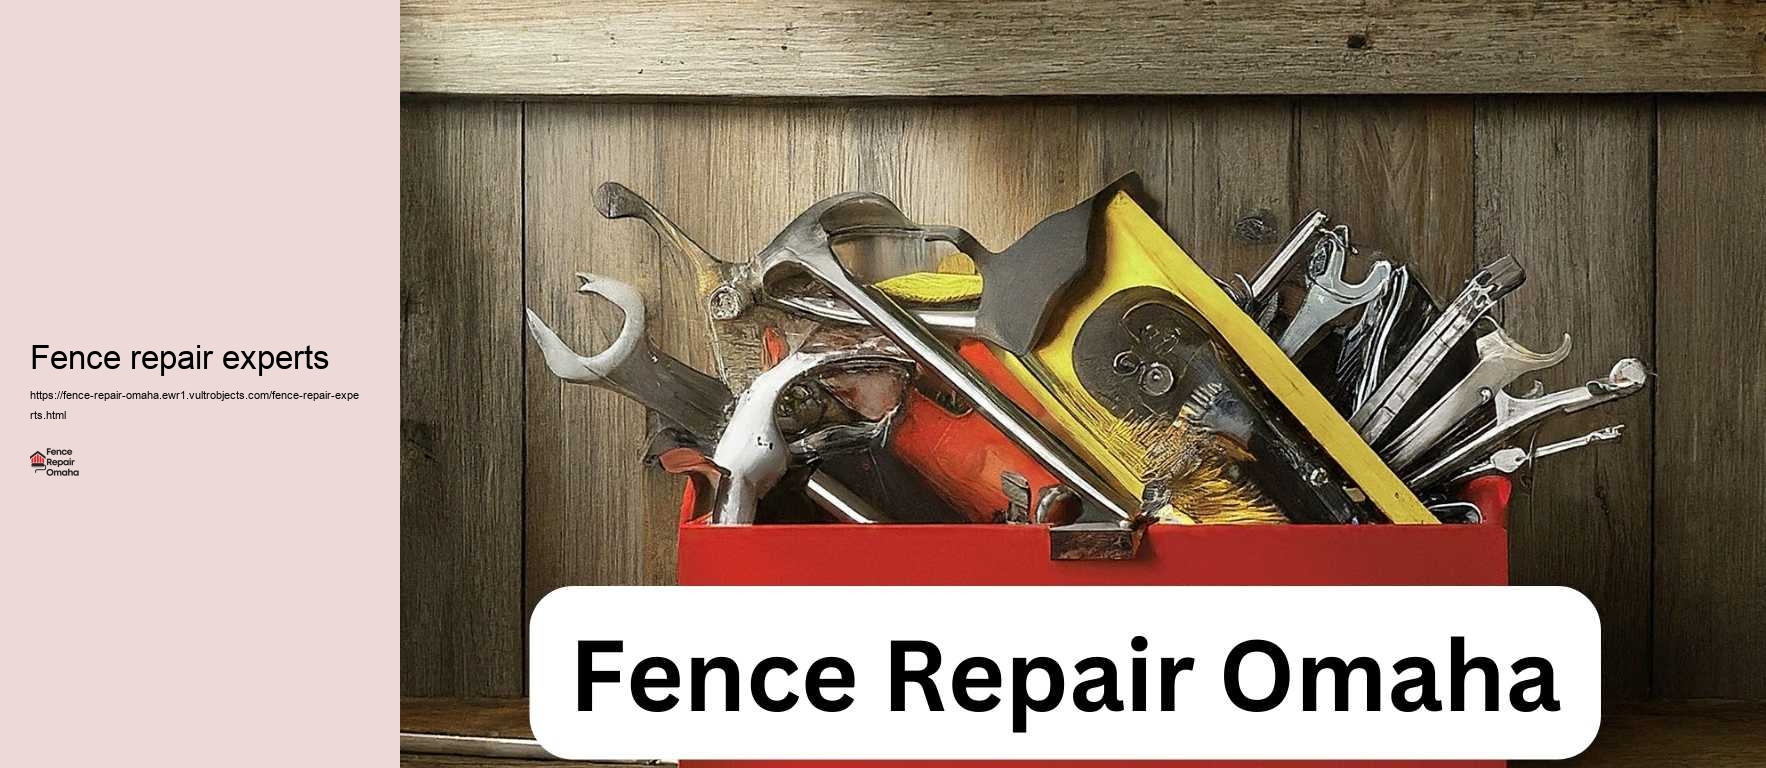 Fence repair experts